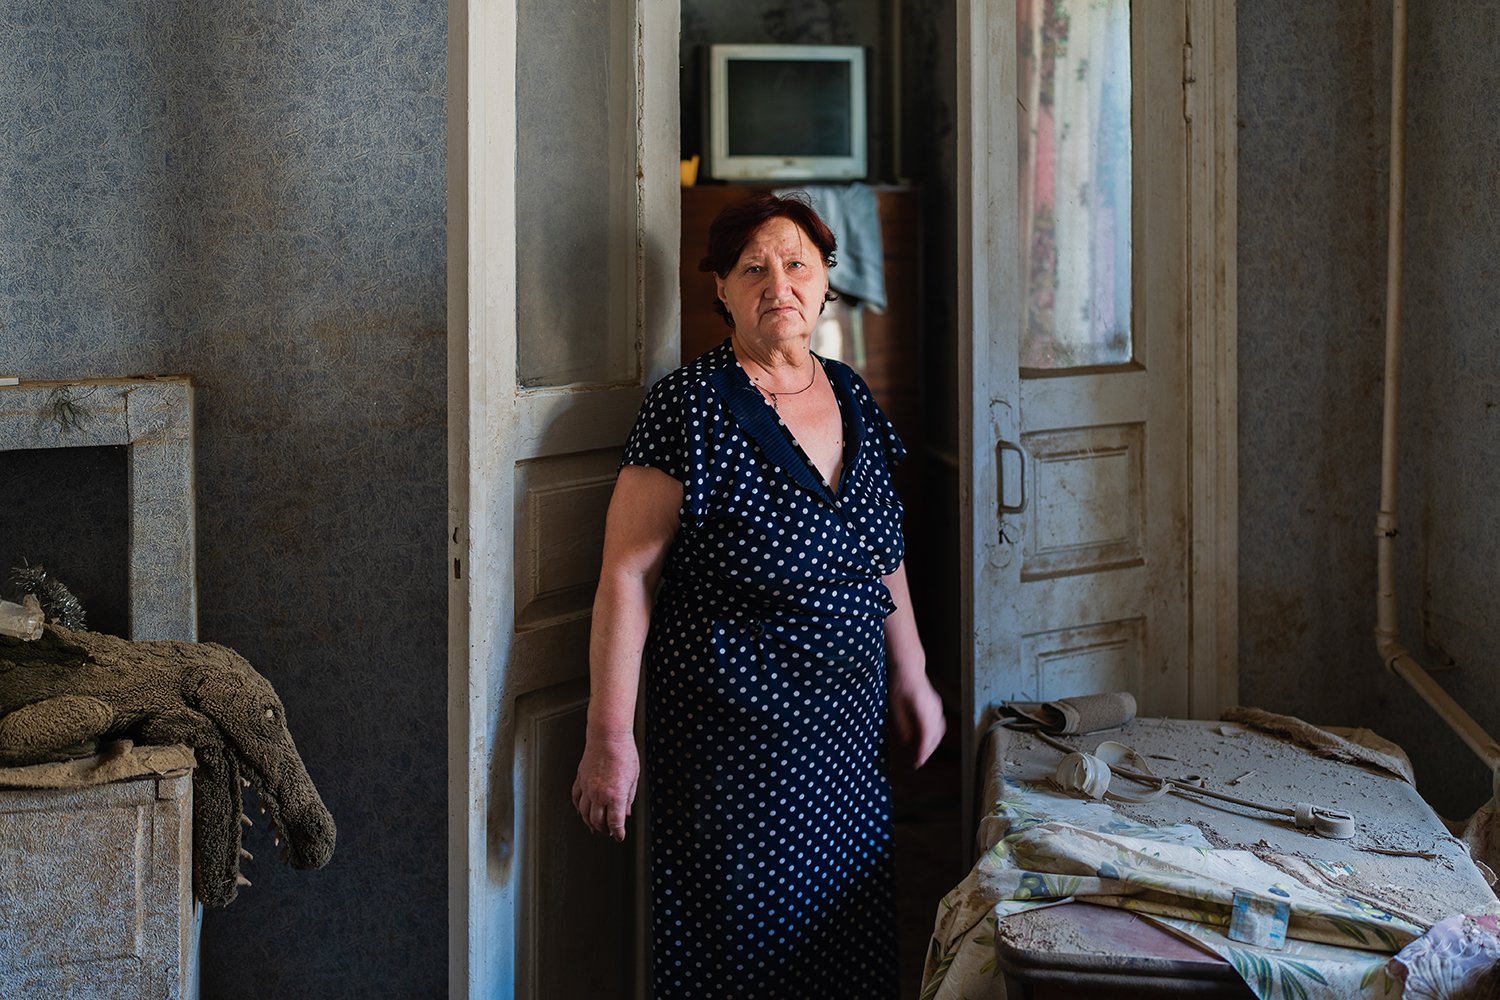 Antonina, 62, stands inside her house.